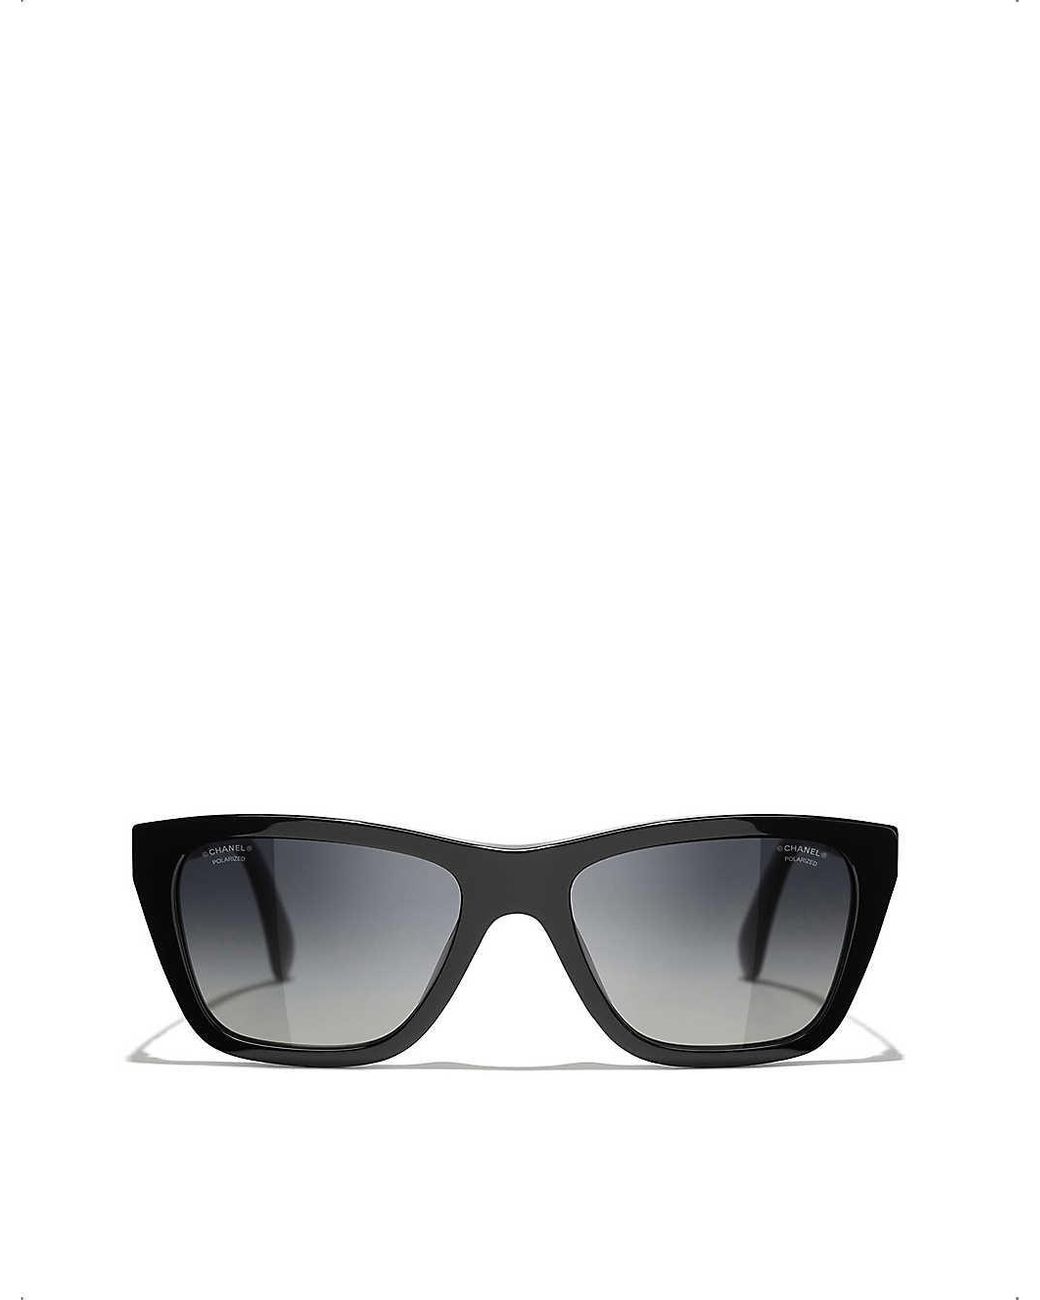 Chanel Rectangle Glasses in Black